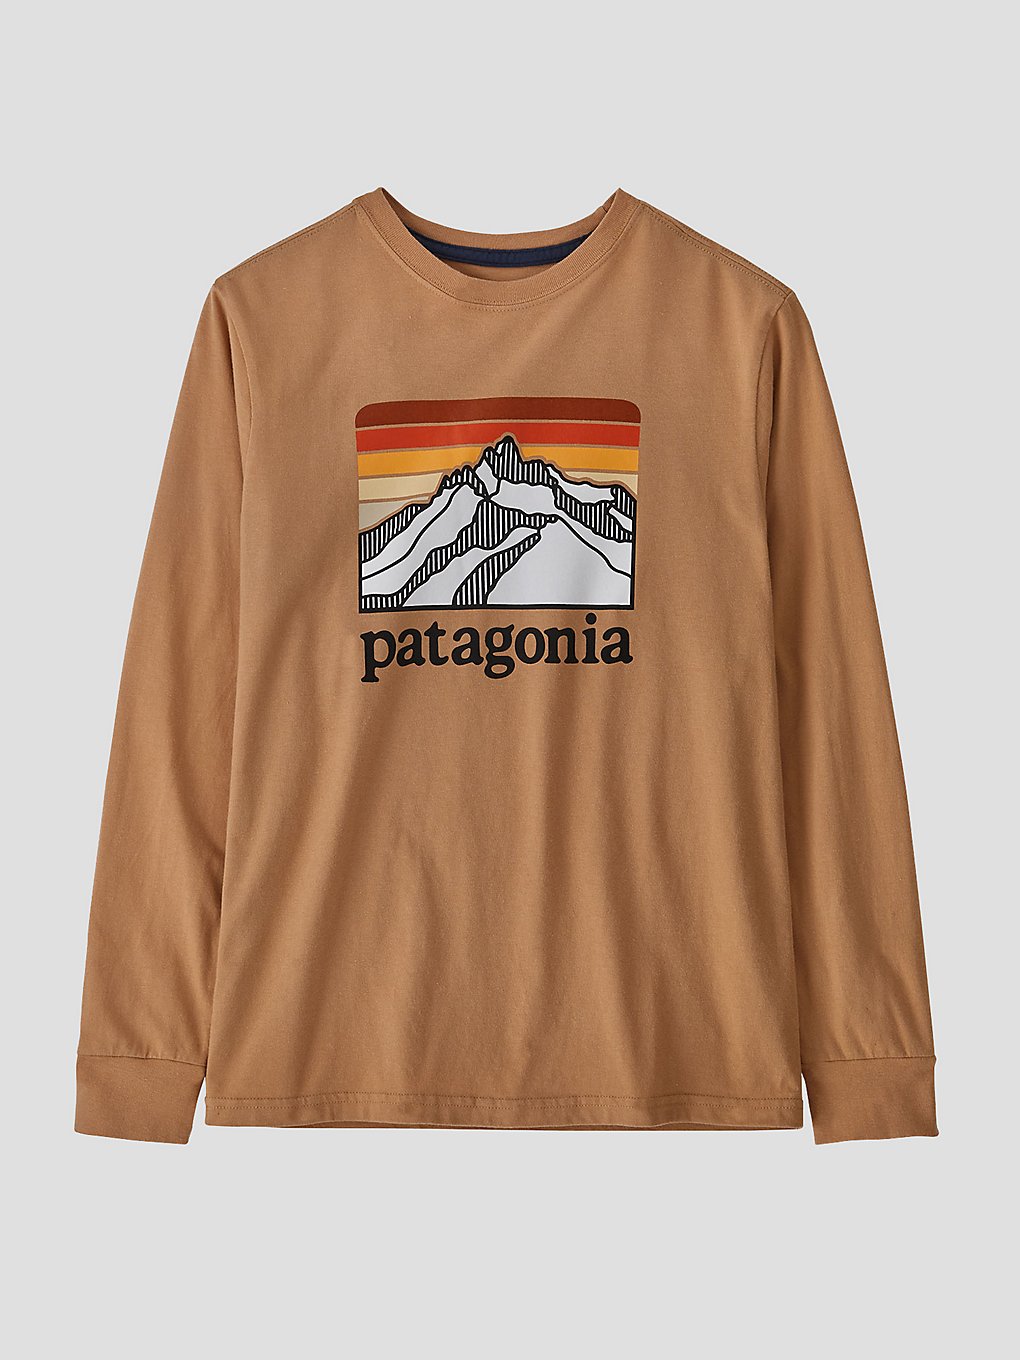 Patagonia Regenerative Organic Certified Kids Longsleeve T-Shirt drk camel kaufen